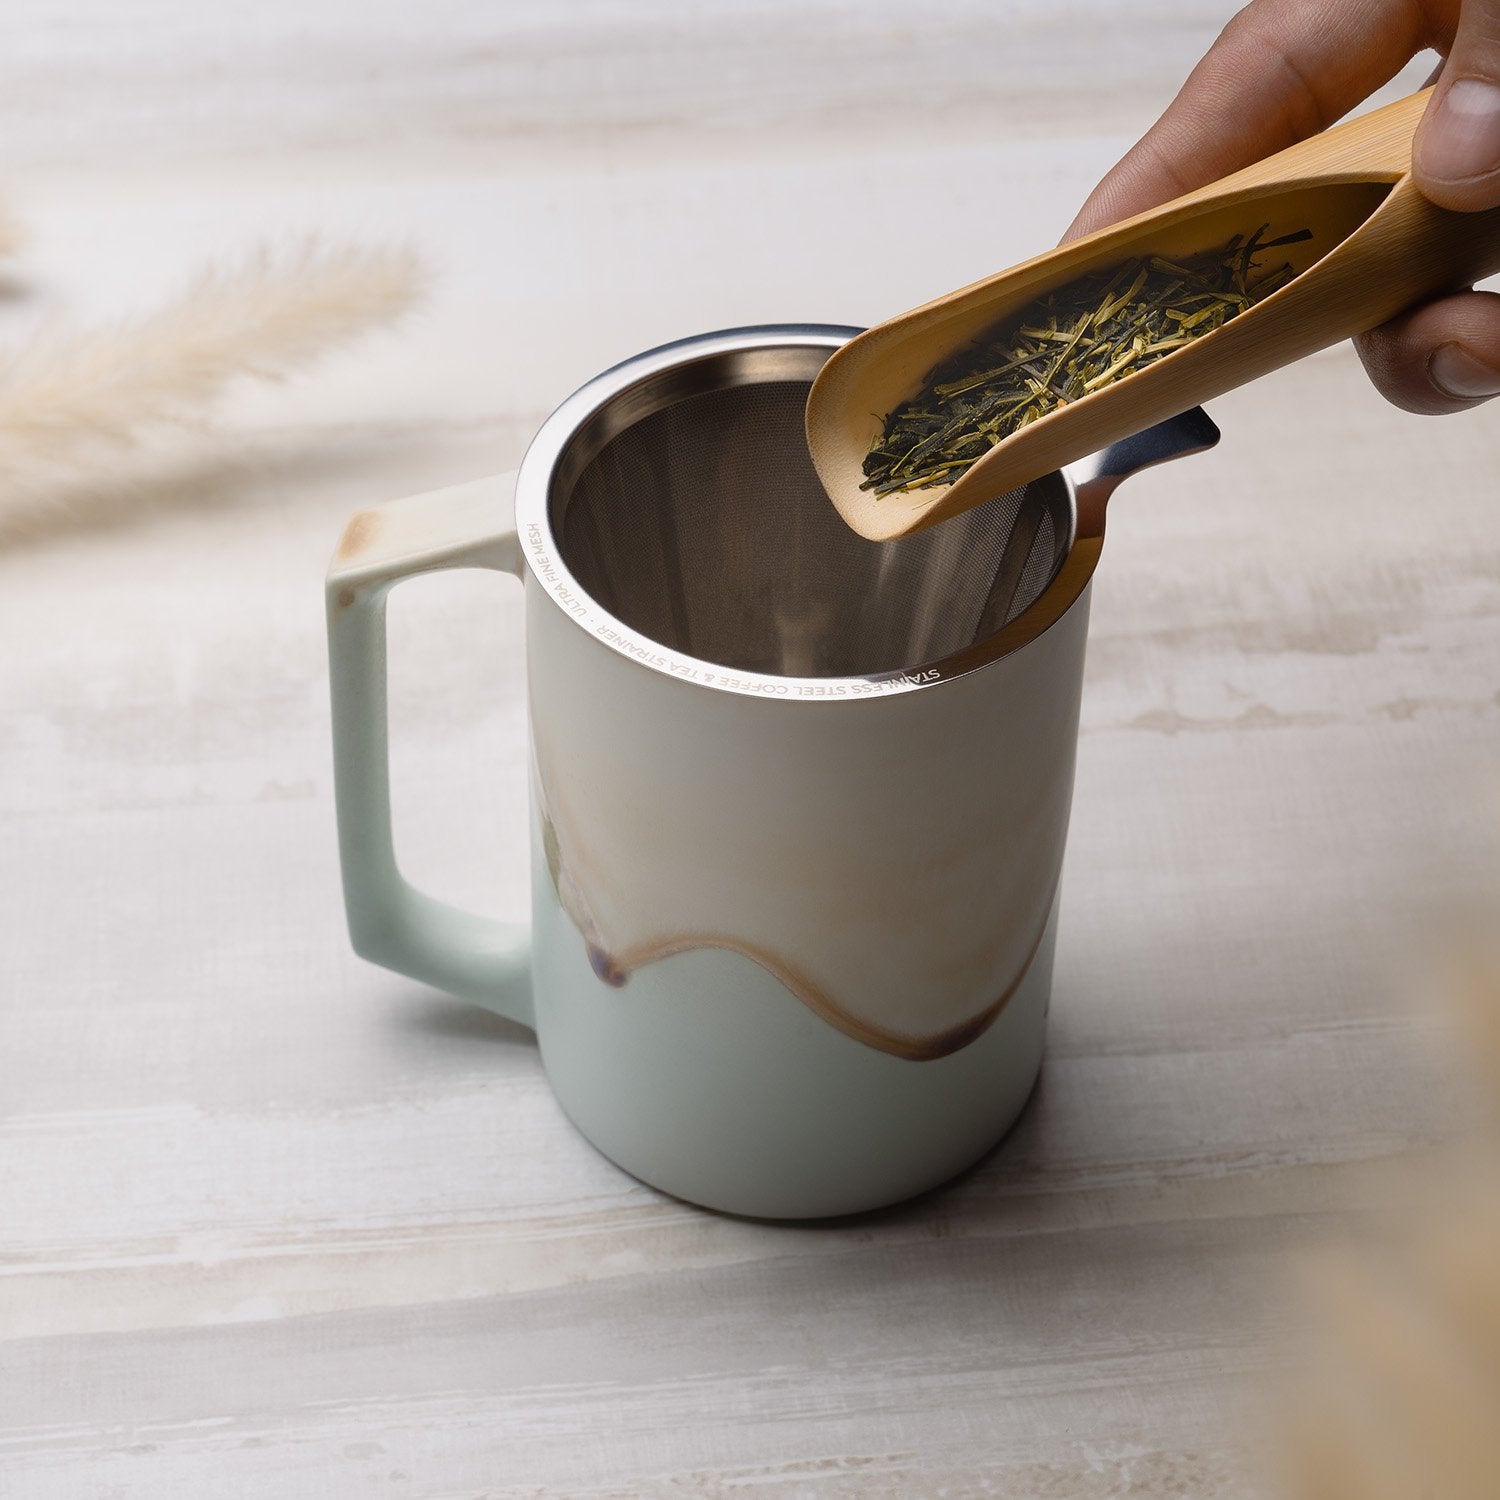 Large tea strainer with mint colored mug